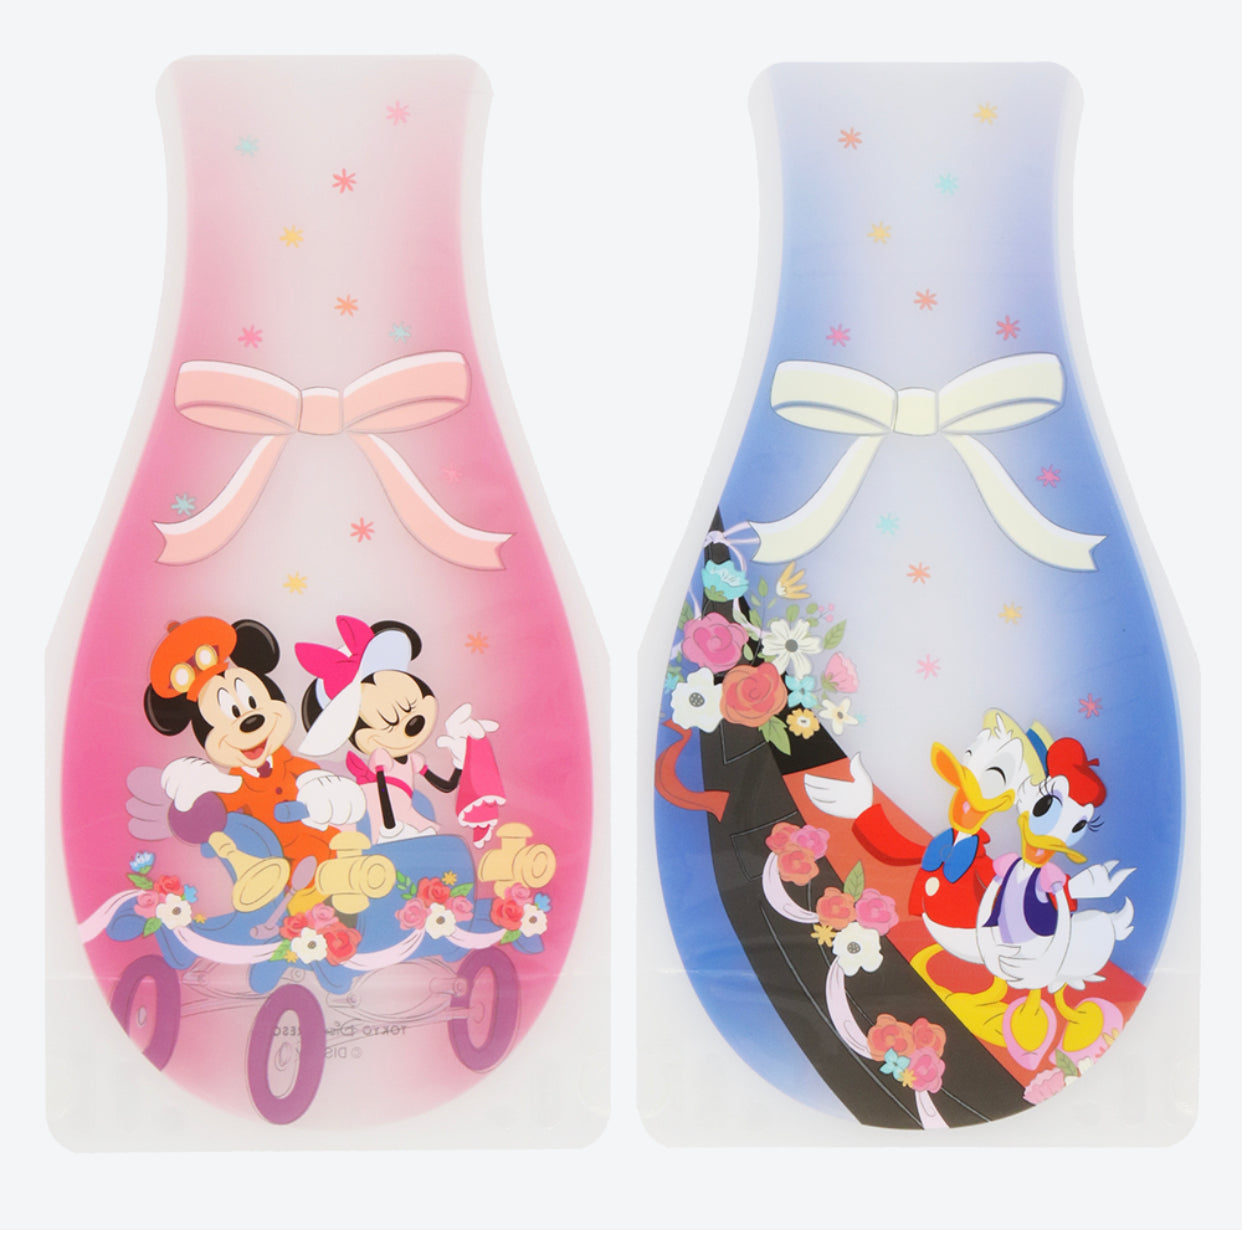 TDR- Tokyo Disney Resort in Bloom x Flower Vase Set (Releasee Date: Aprill 25)